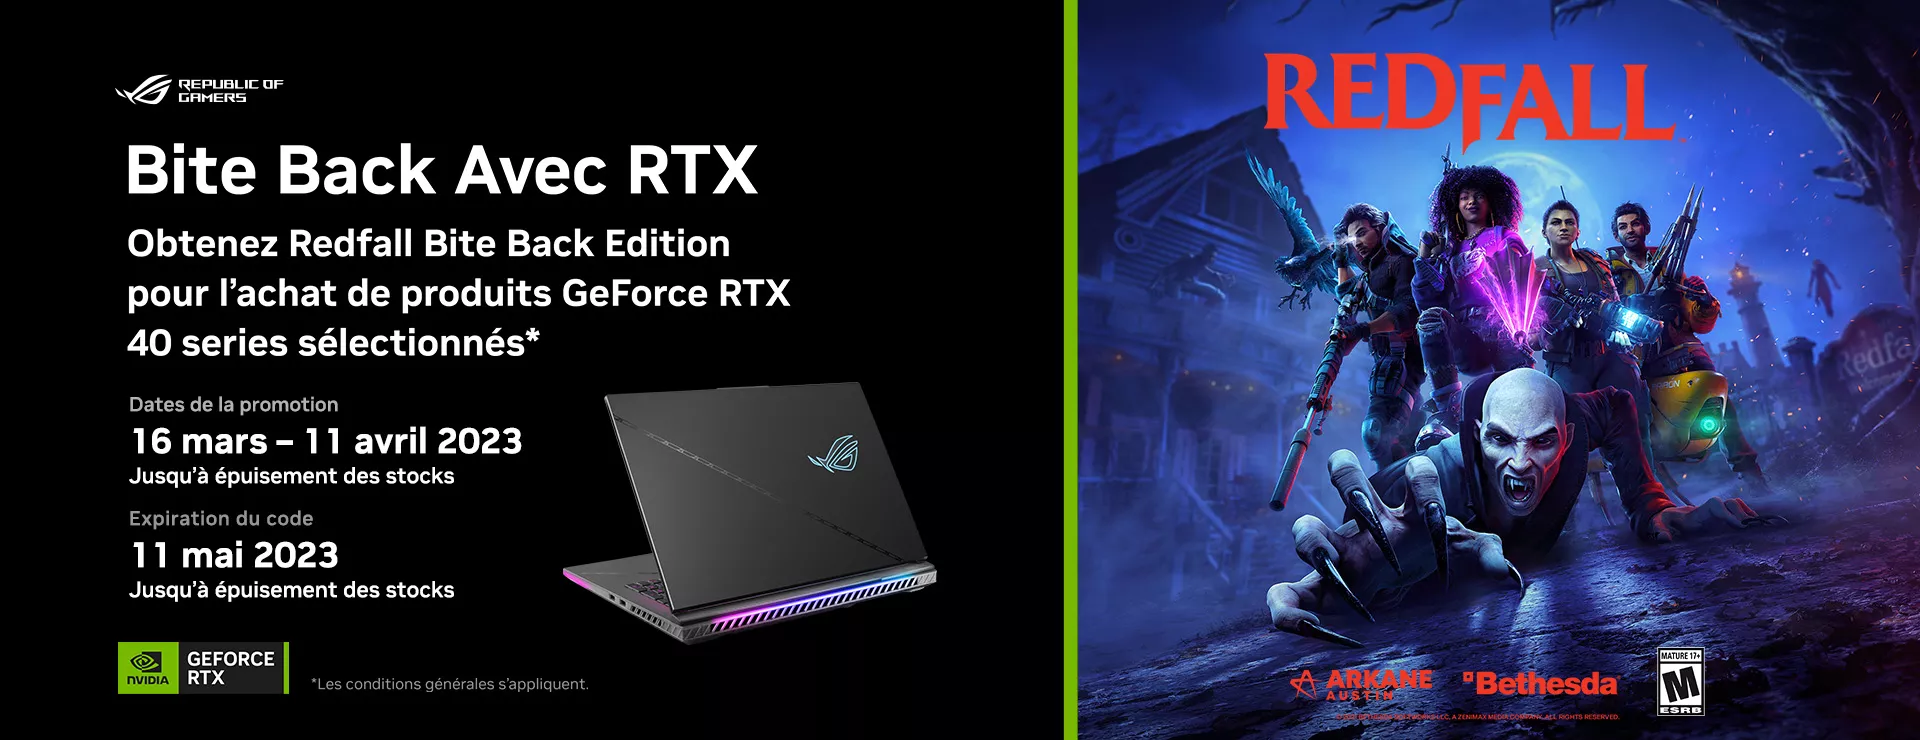 1 PC acheté contenant une GPU Nvidia 4080/4090 = Le jeu Redfall offert !